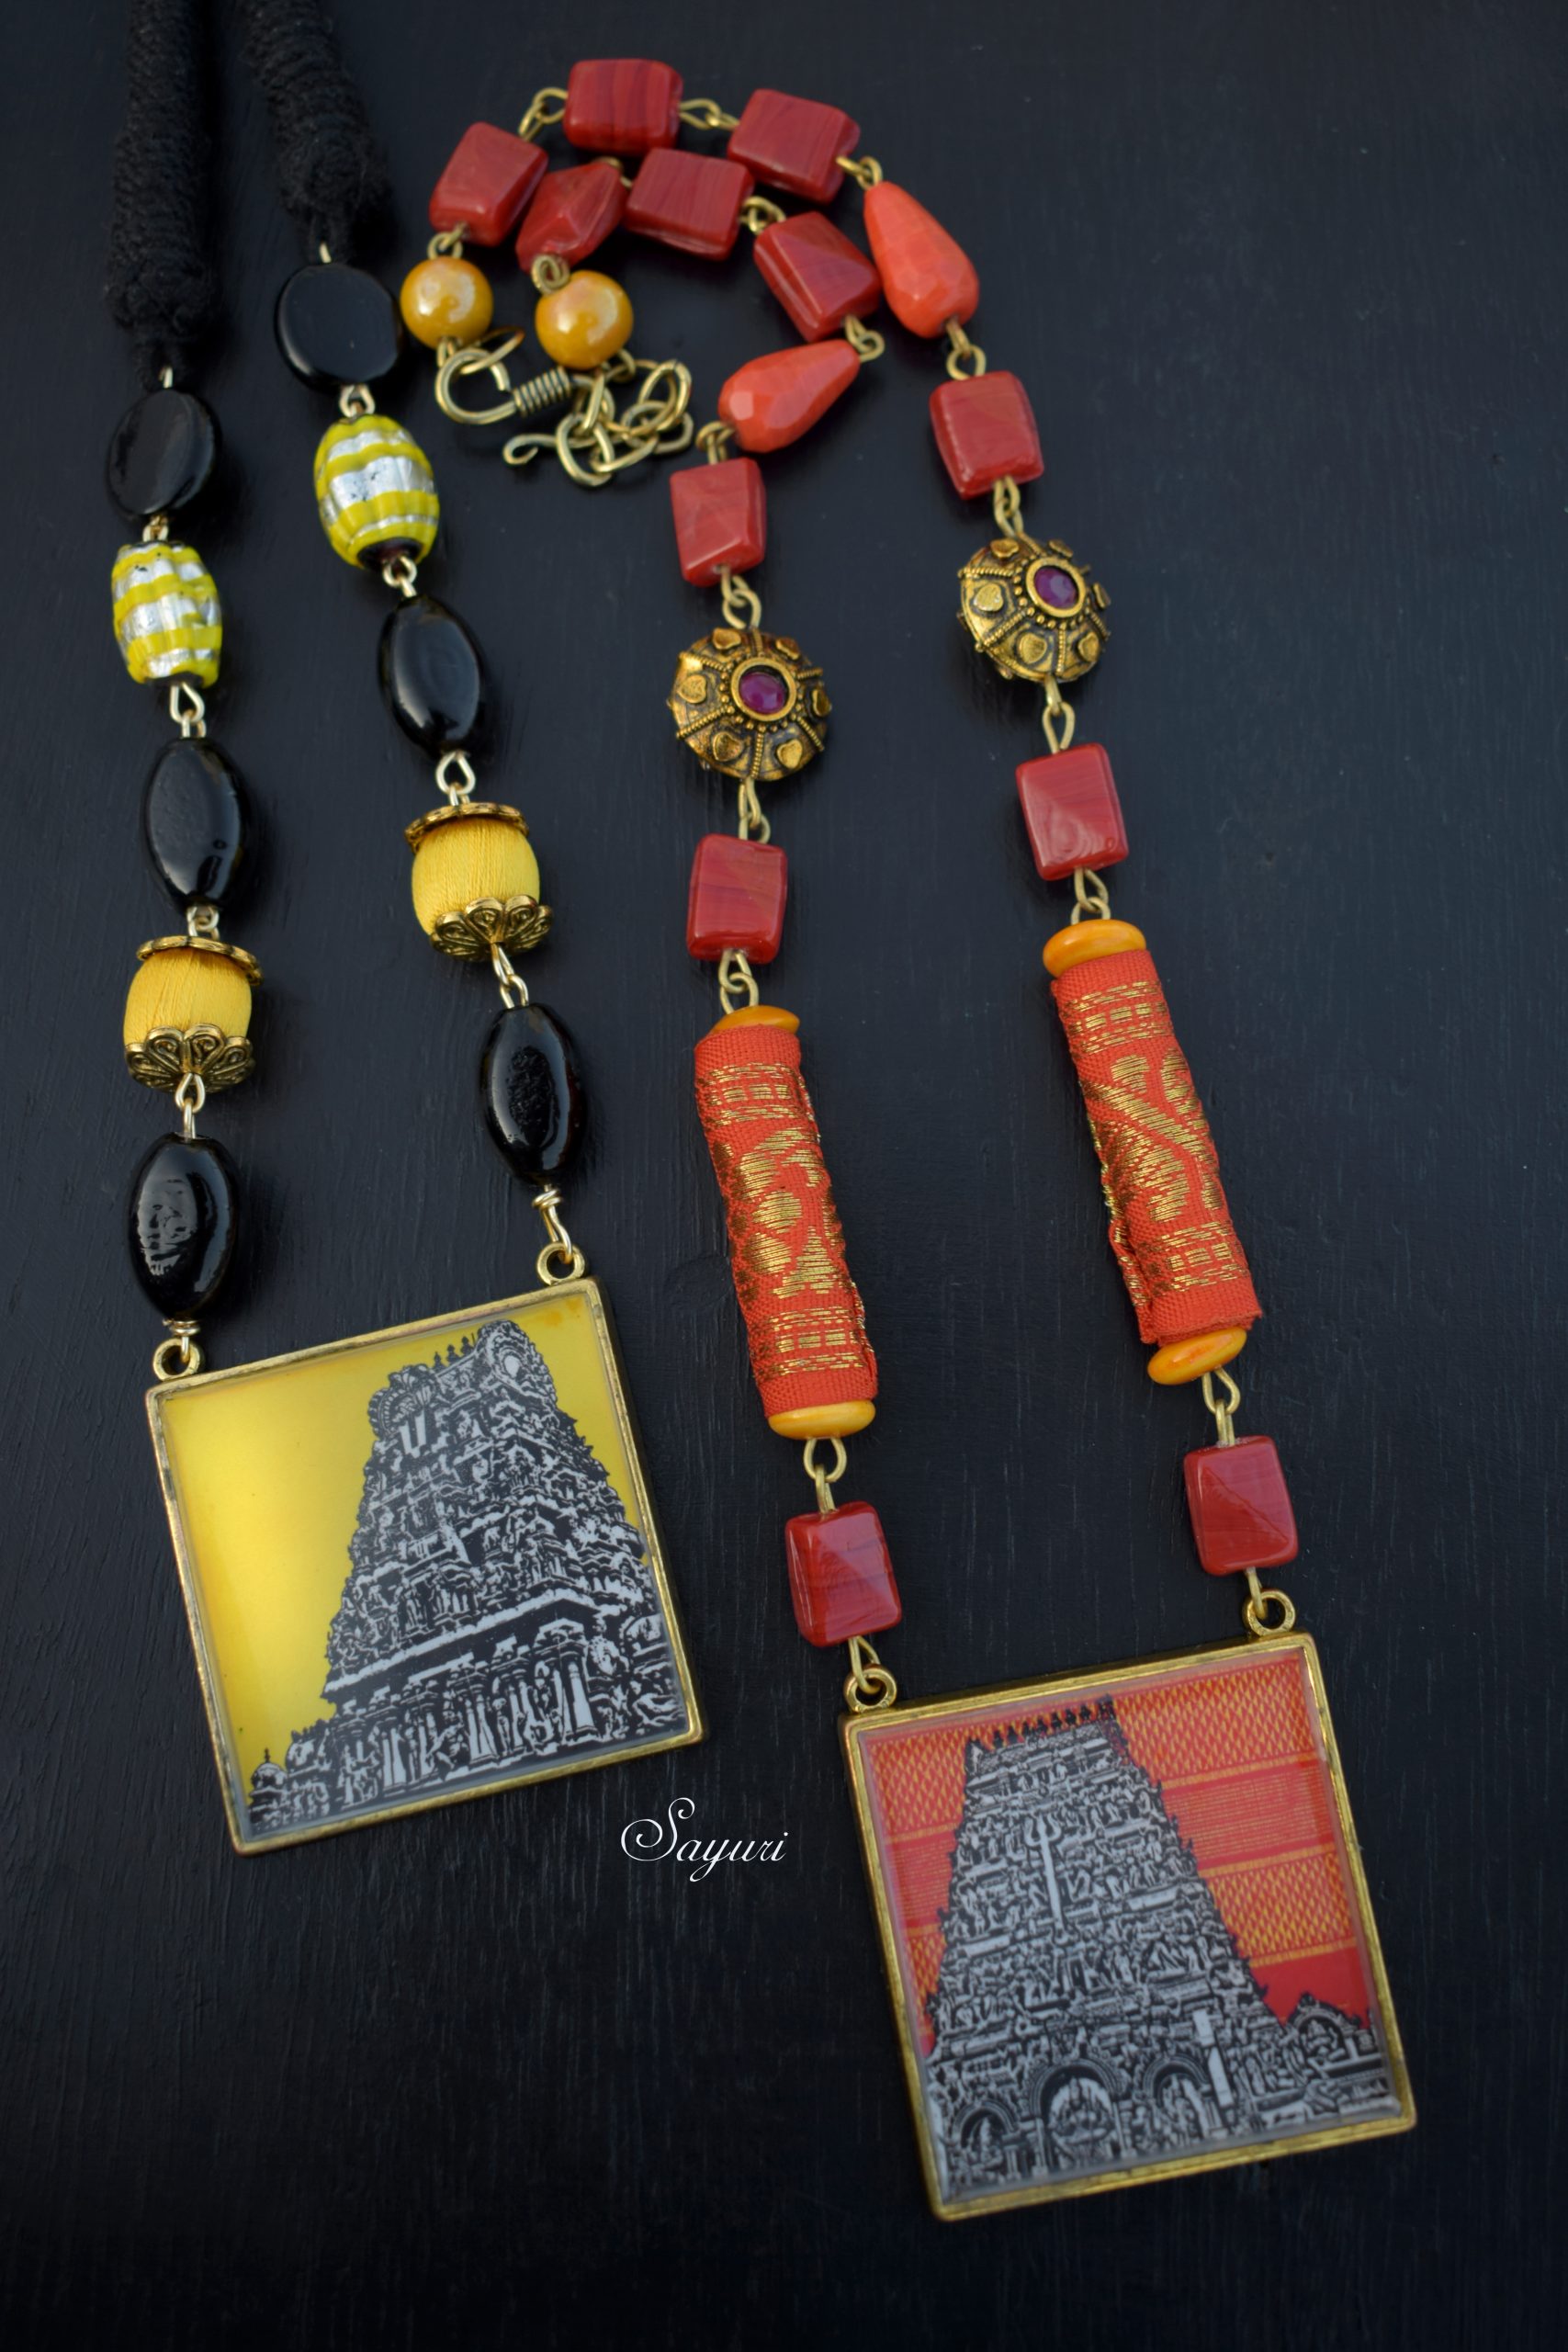 Chennai Temple gopuram necklaces